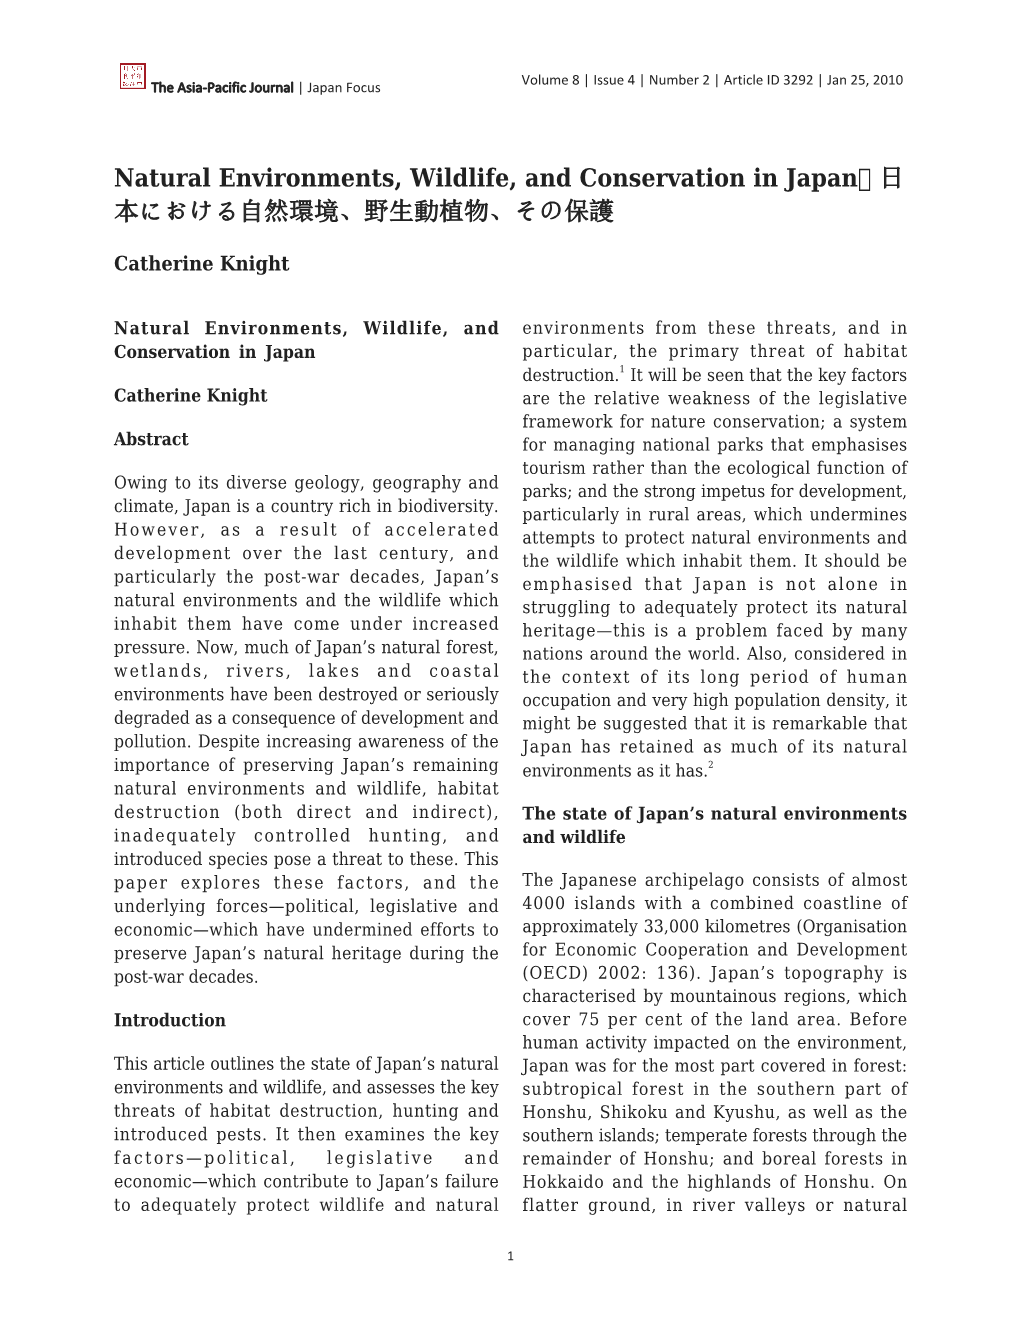 Natural Environments, Wildlife, and Conservation in Japan 日 本における自然環境、野生動植物、その保護